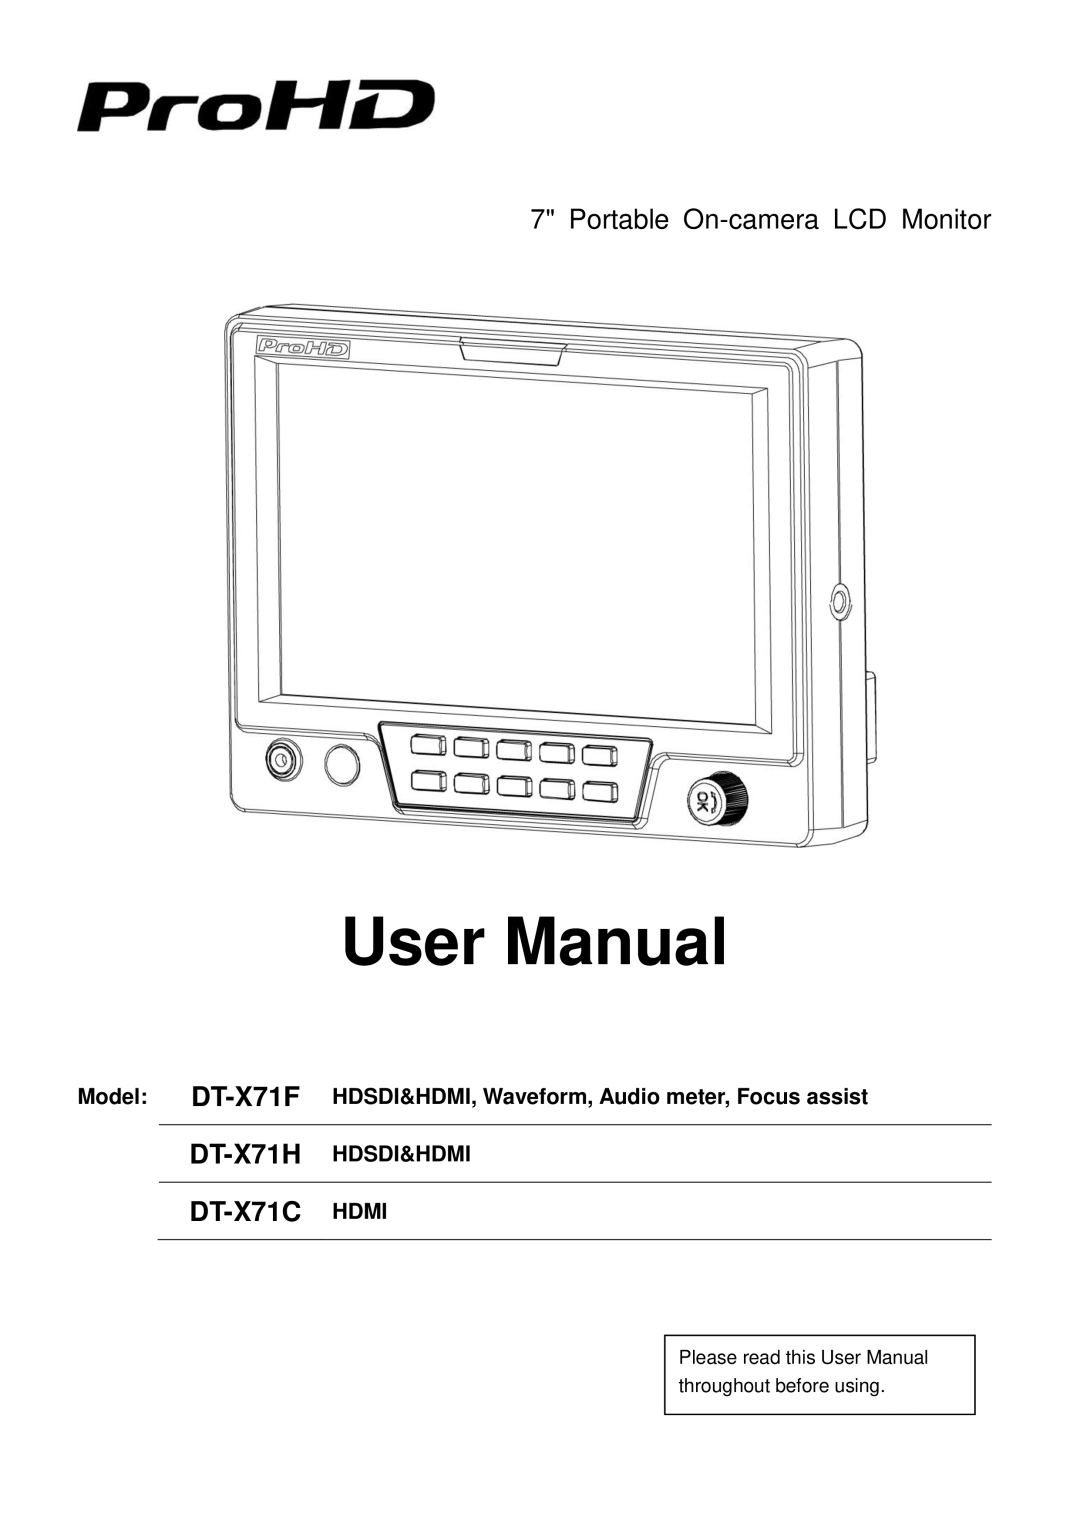 JVC DTX71H user manual Model DT-X71F HDSDI&HDMI, Waveform, Audio meter, Focus assist, DT-X71H HDSDI&HDMI, User Manual 